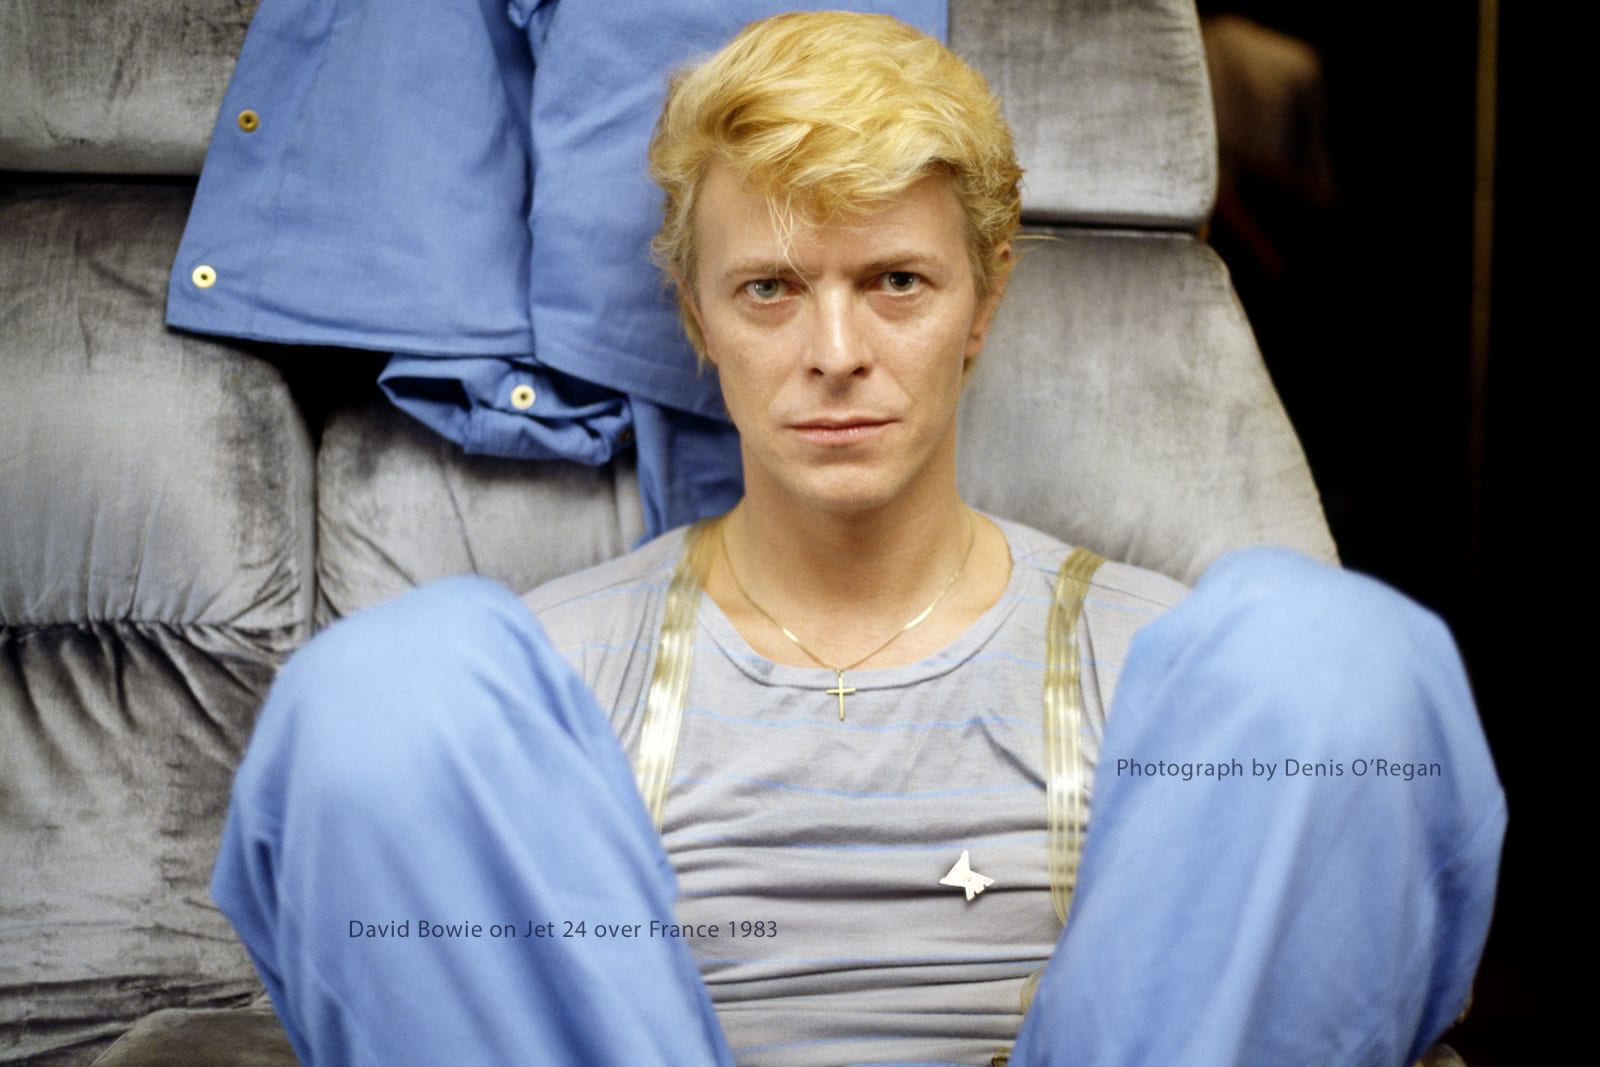 DAVID BOWIE, David Bowie Jet 24 over France, 1983